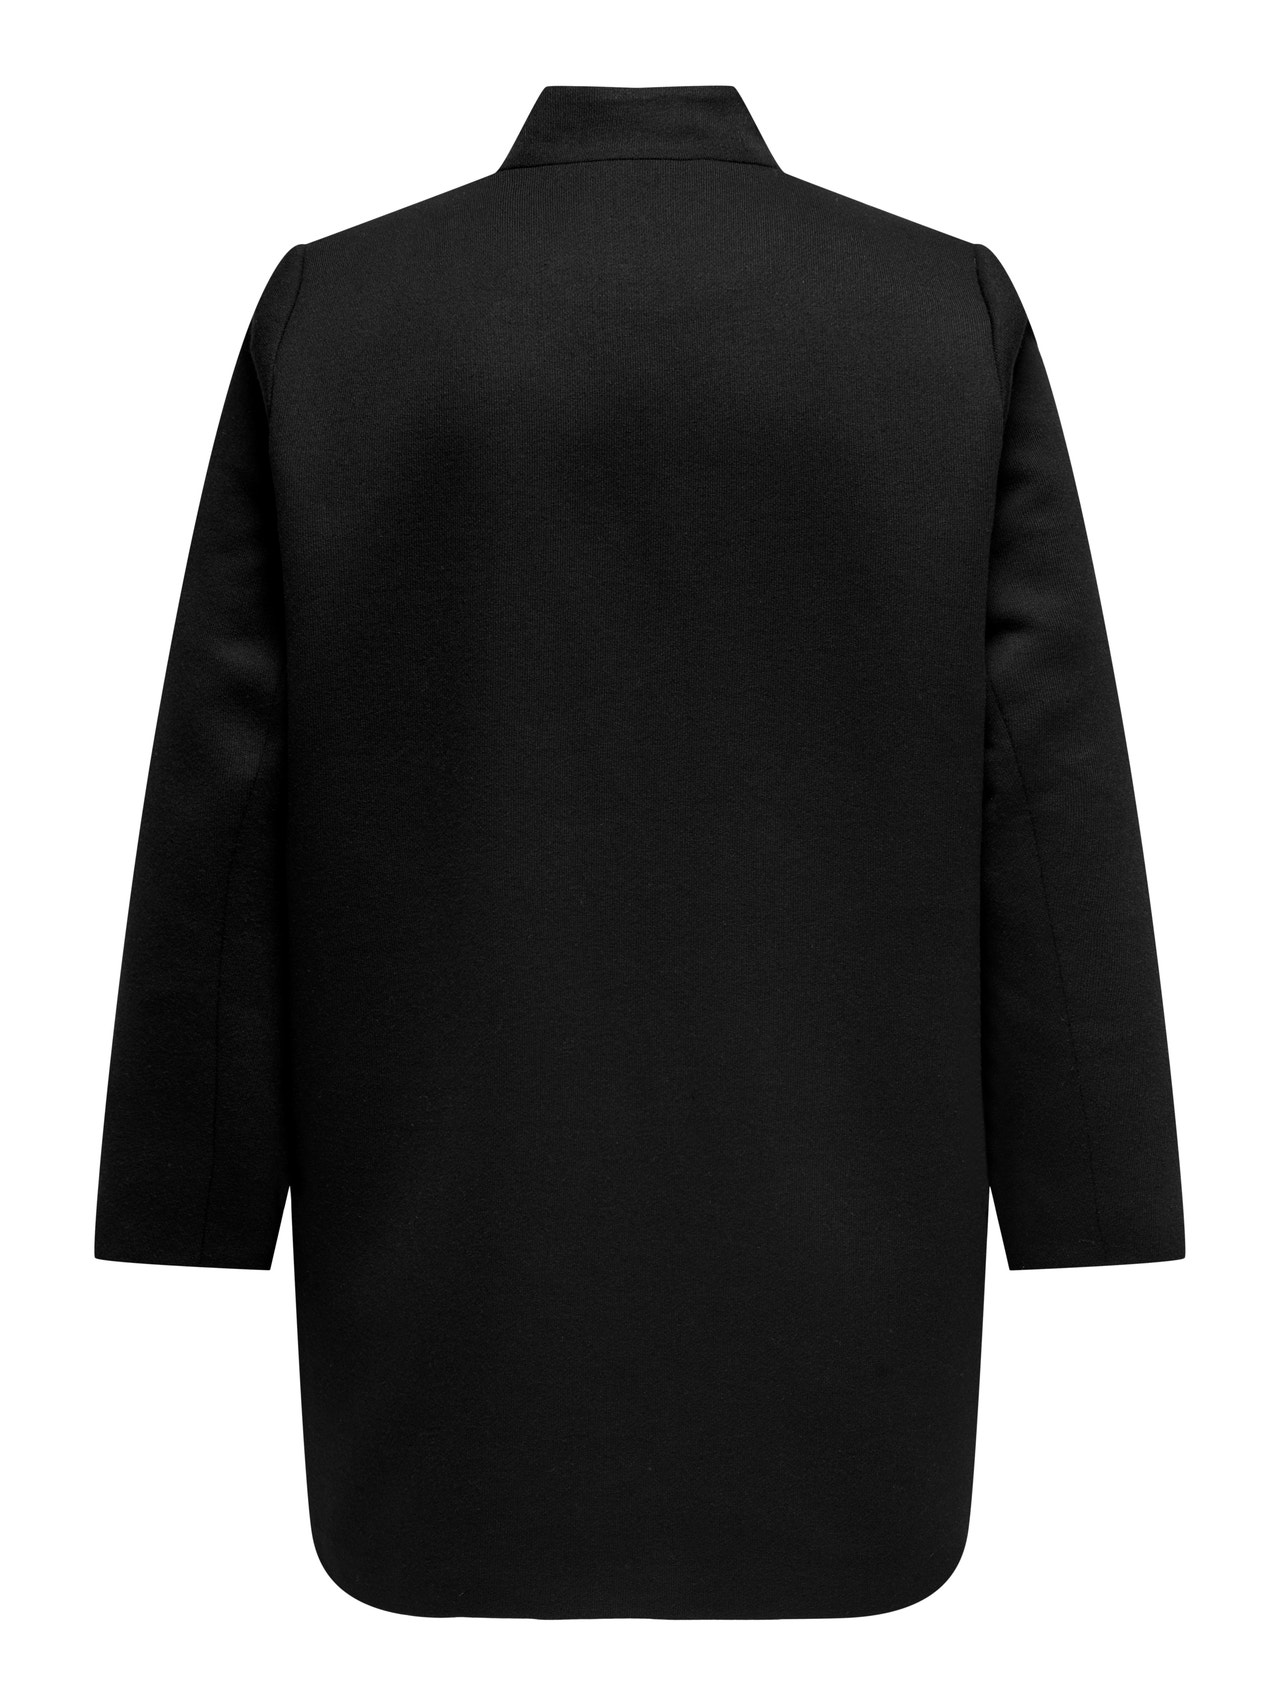 ONLY Curvy blazer with spread collar -Black - 15296009